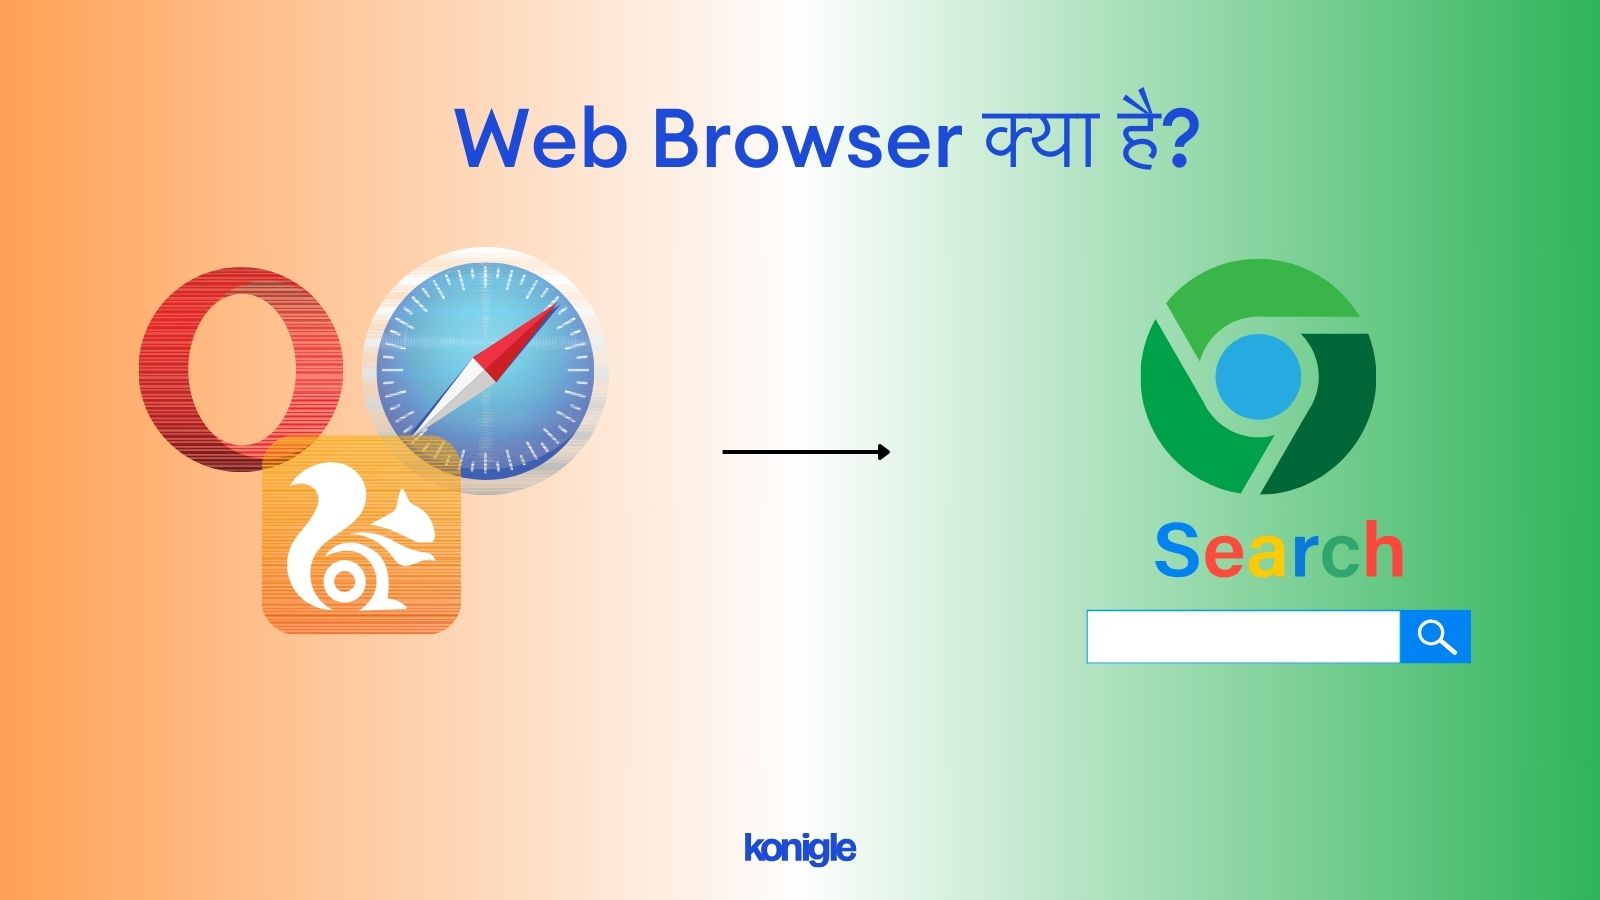 Web Browser in hindi